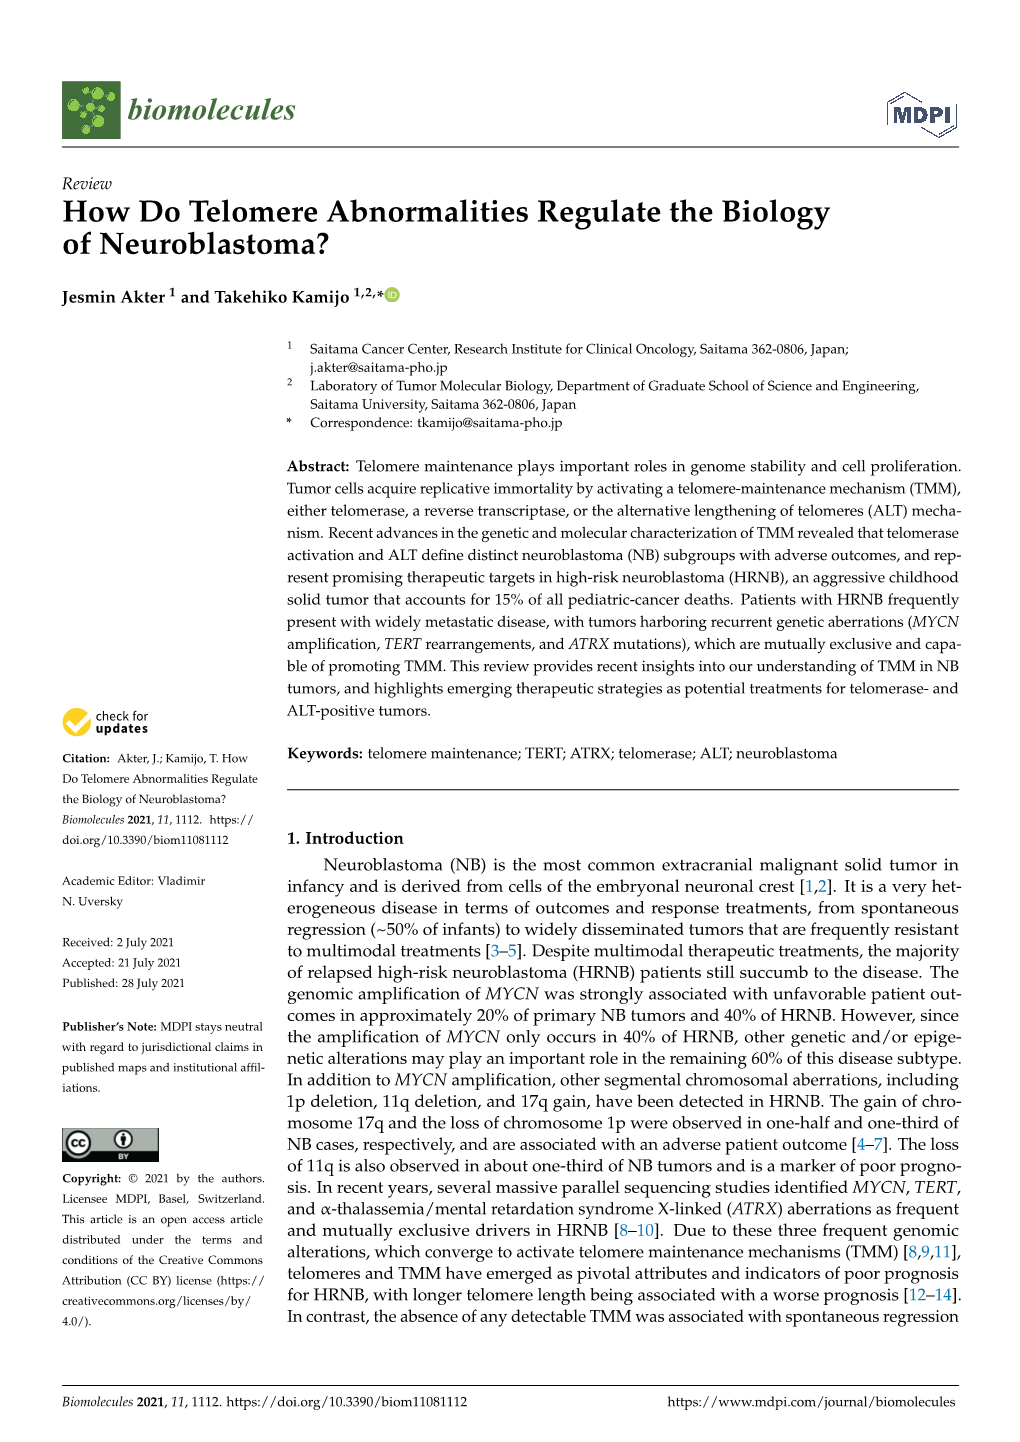 How Do Telomere Abnormalities Regulate the Biology of Neuroblastoma?